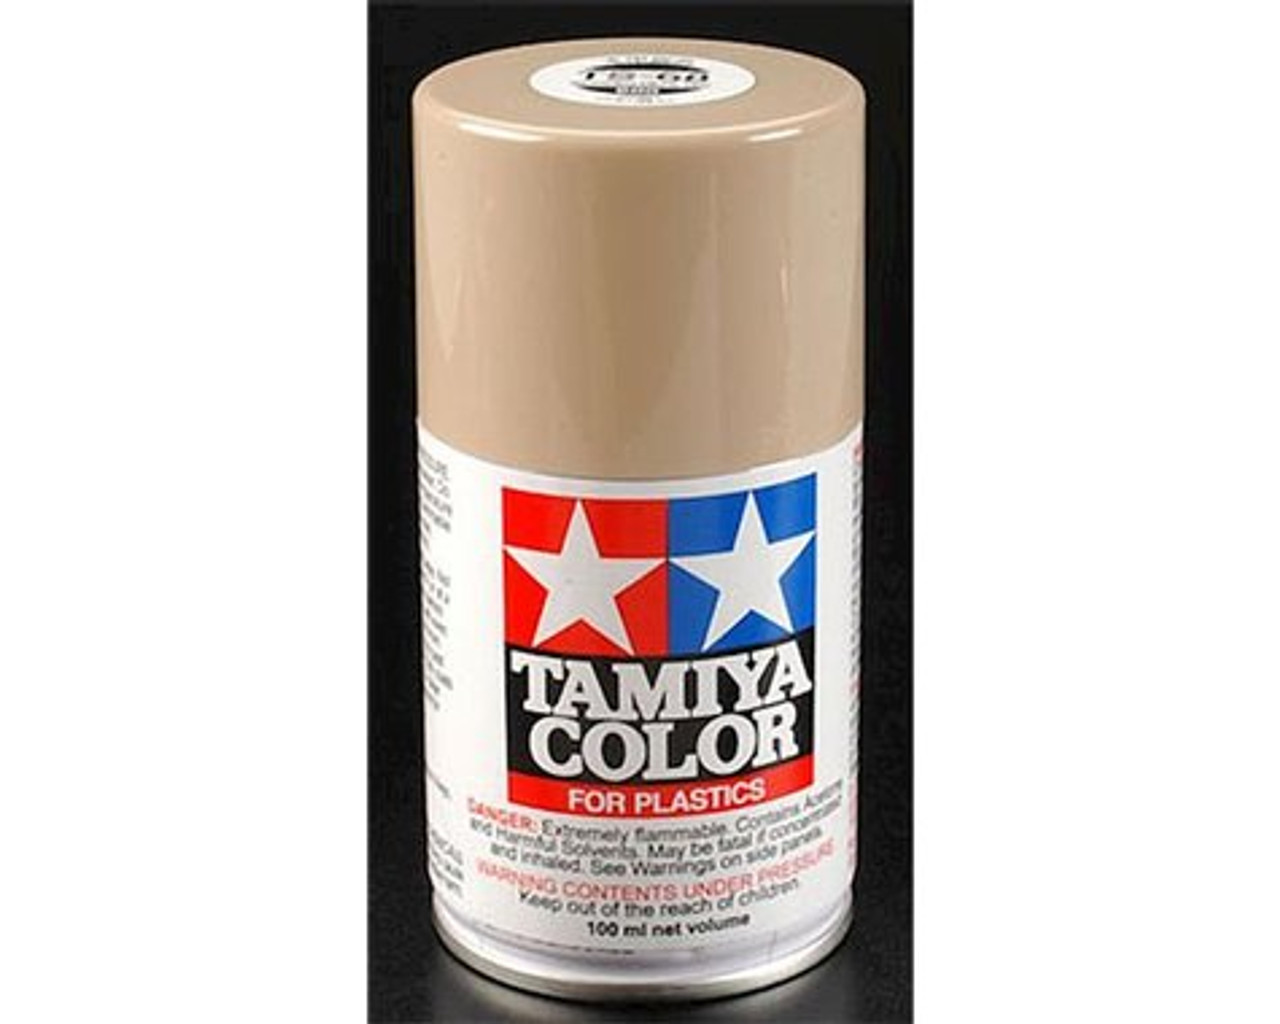 Tamiya TS-68 Wooden Deck Tan Lacquer Spray Paint (100ml) - Hobbies Galore